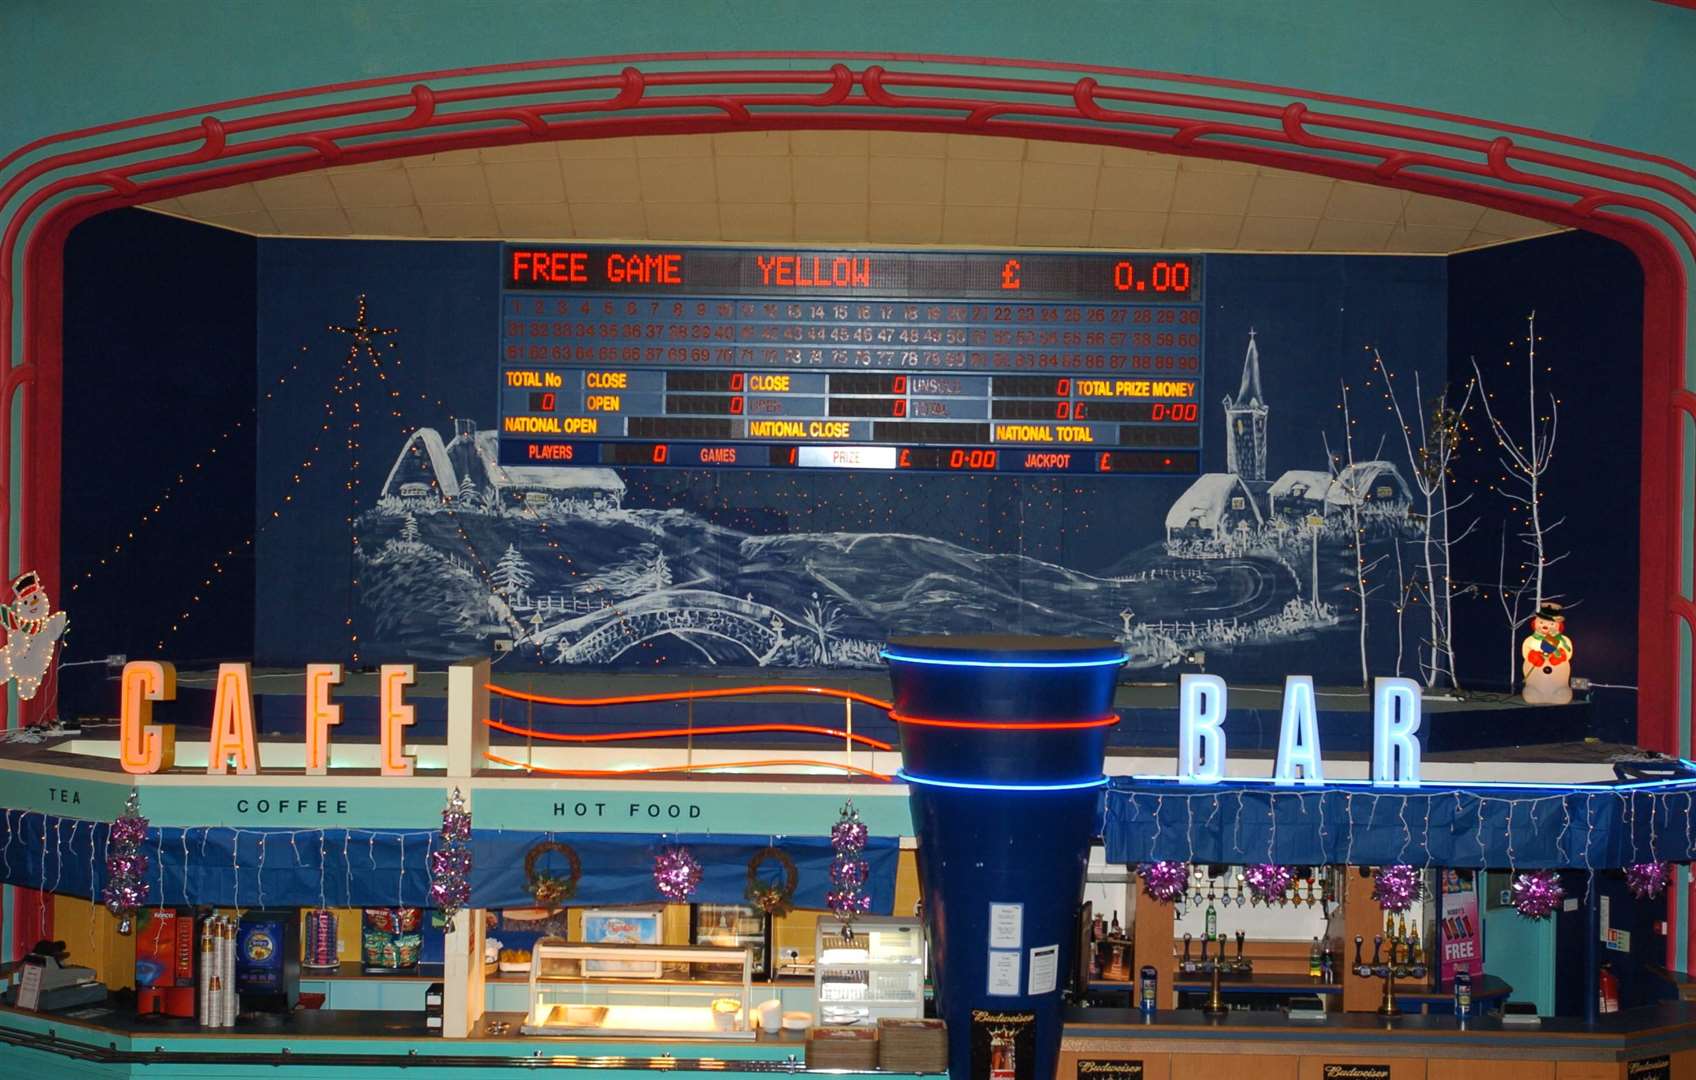 Inside Mecca Bingo in December 2005